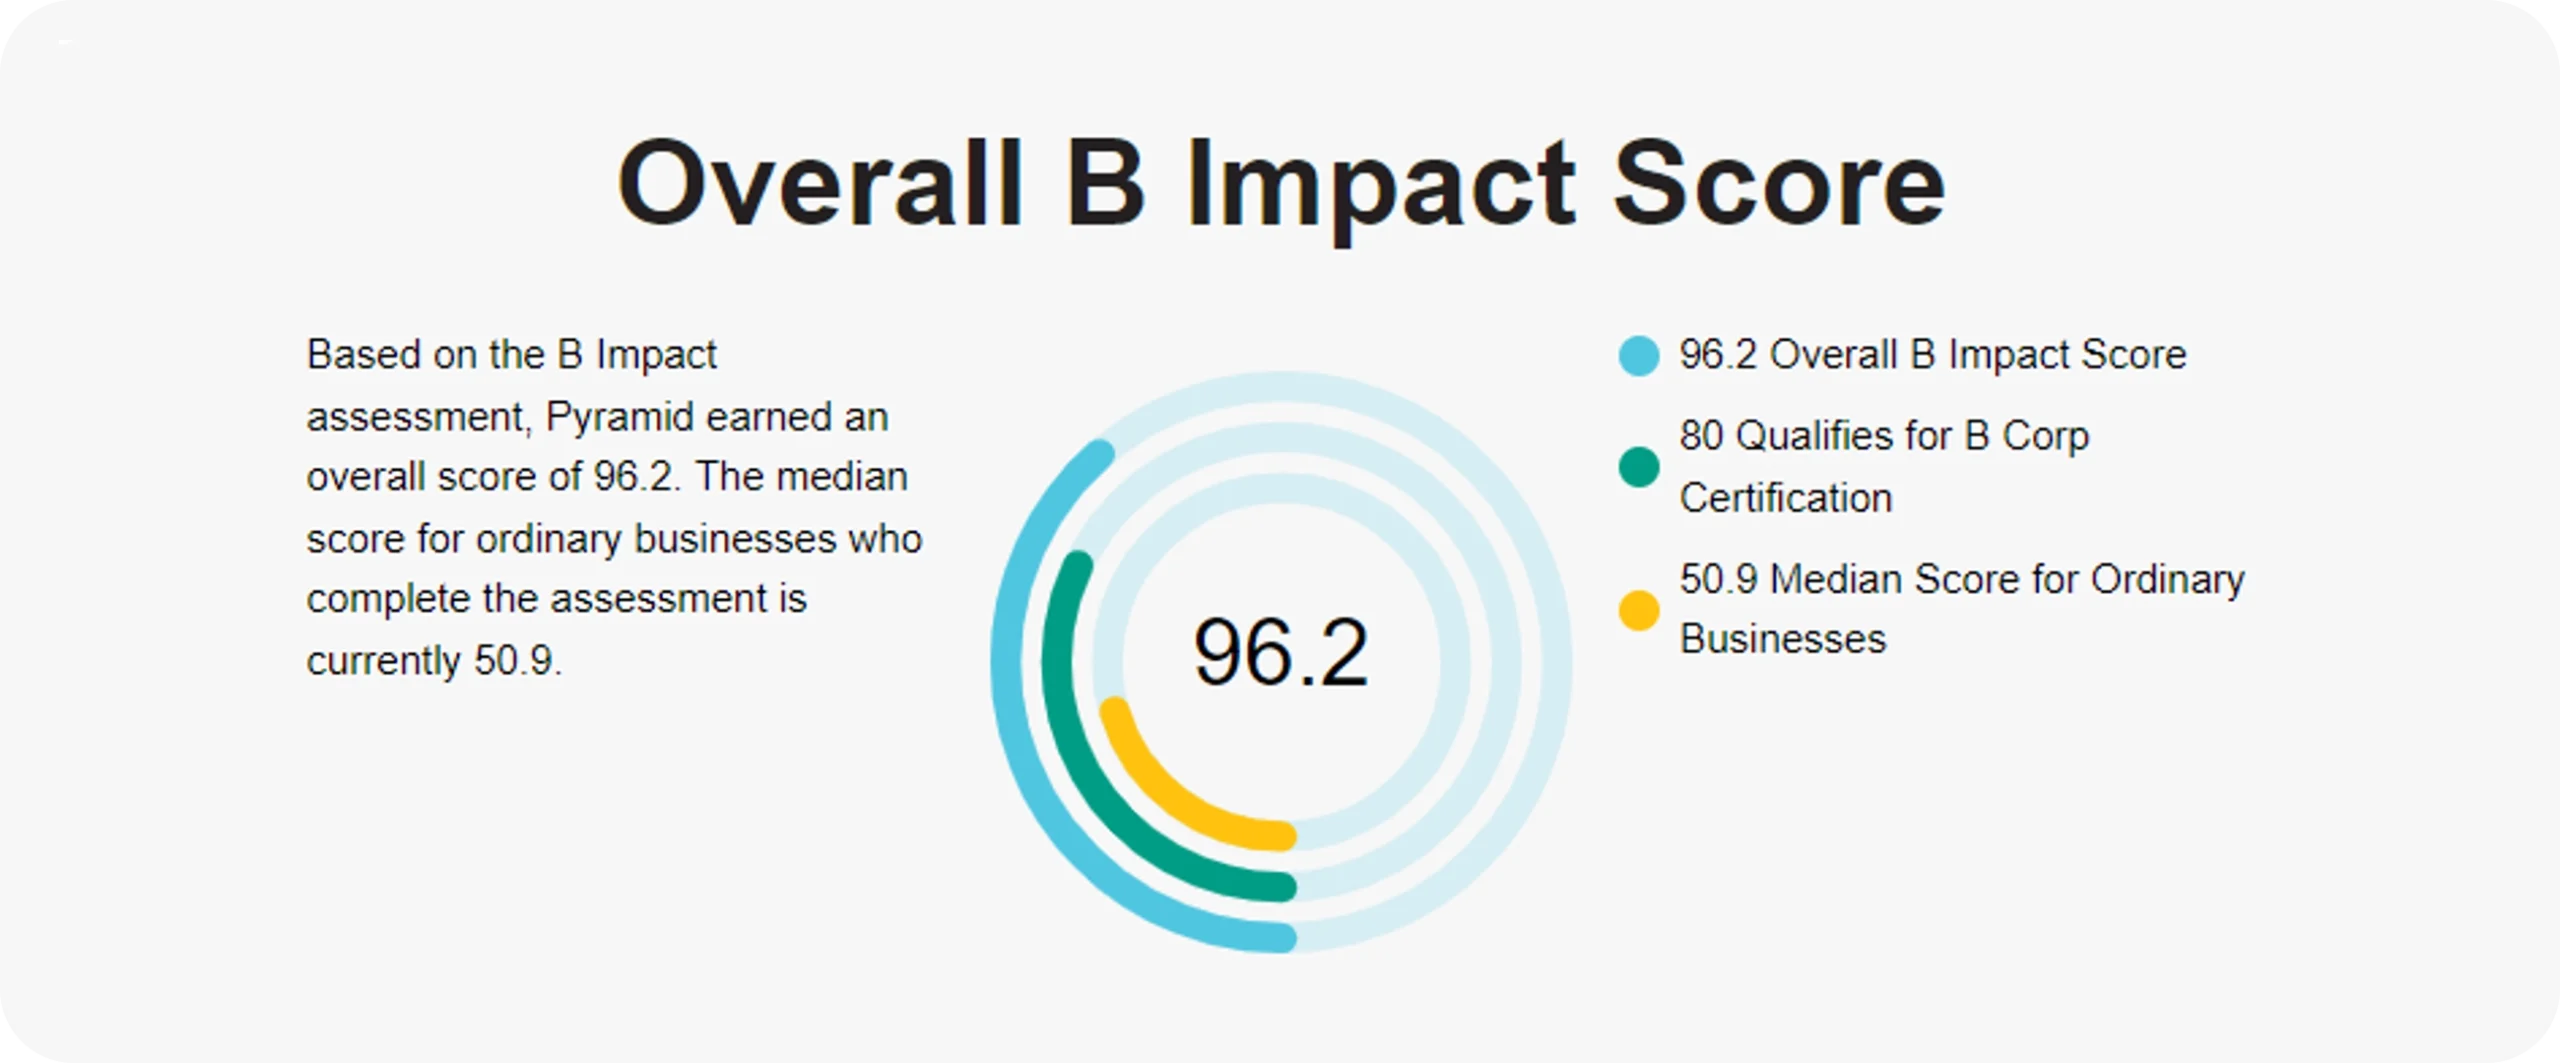 UpSlide's B Impact score of 96.2